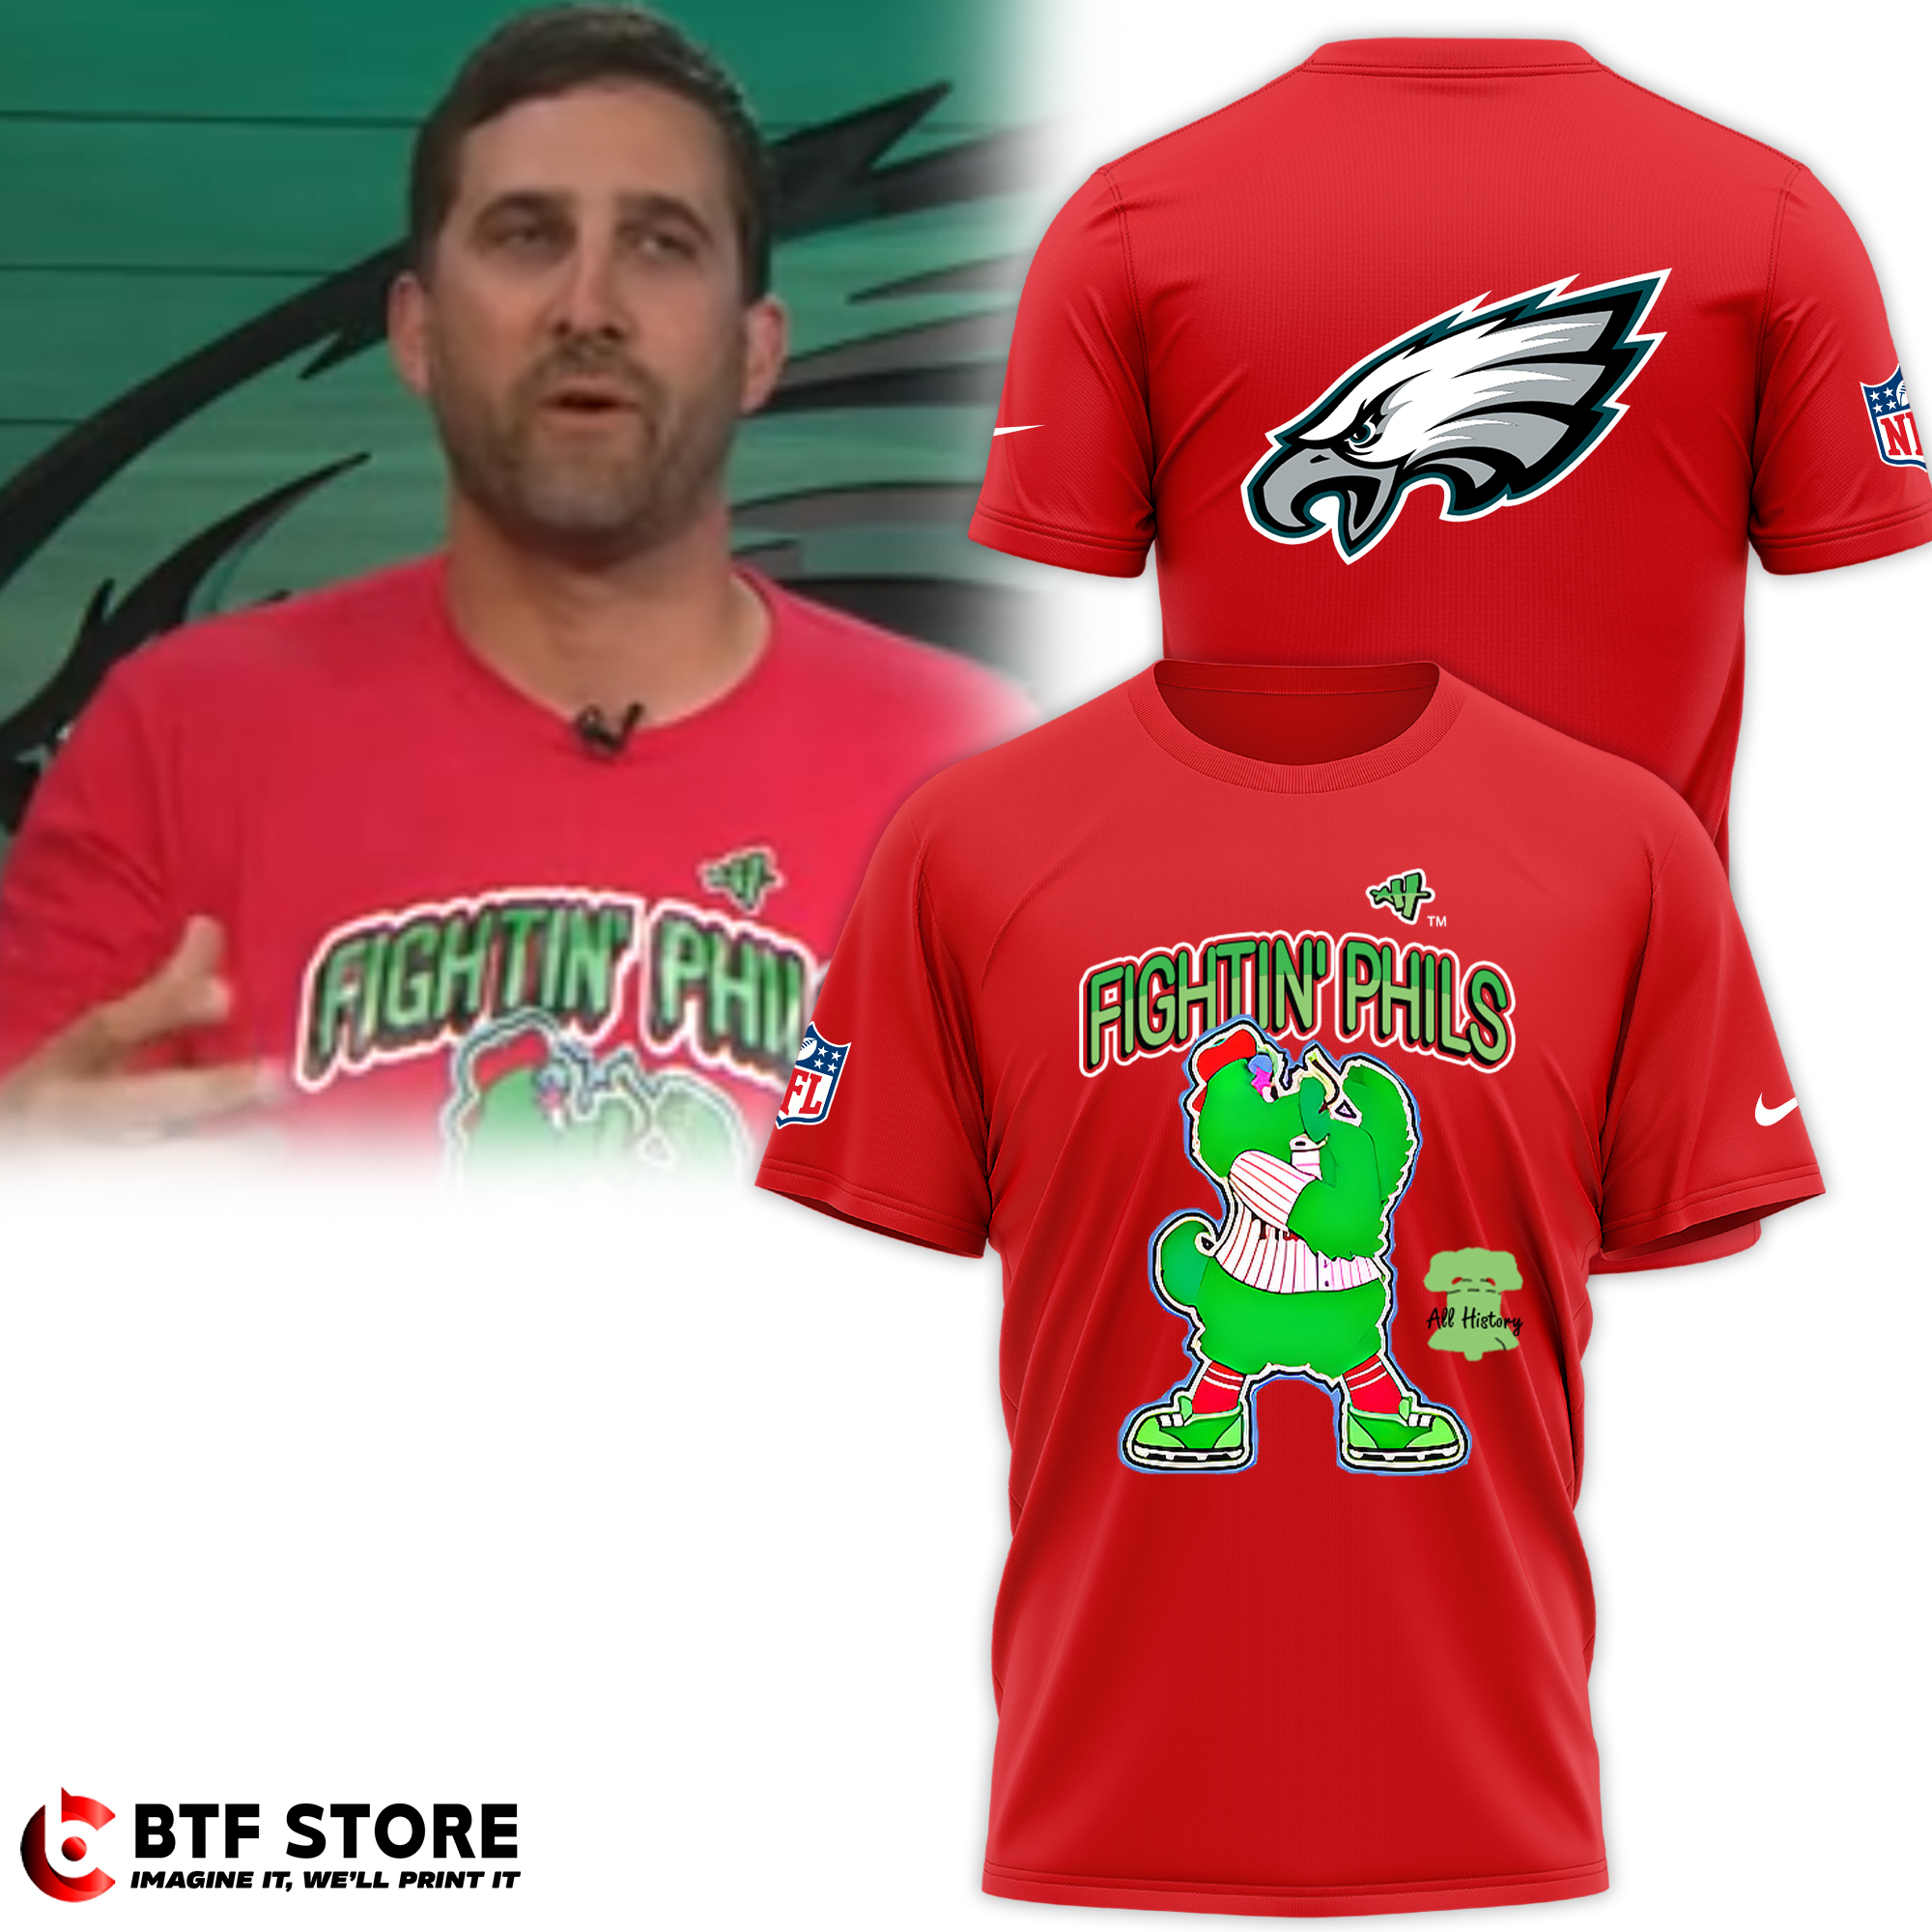 Philadelphia Eagles FIGHTIN' PHILS T-Shirt - BTF Store